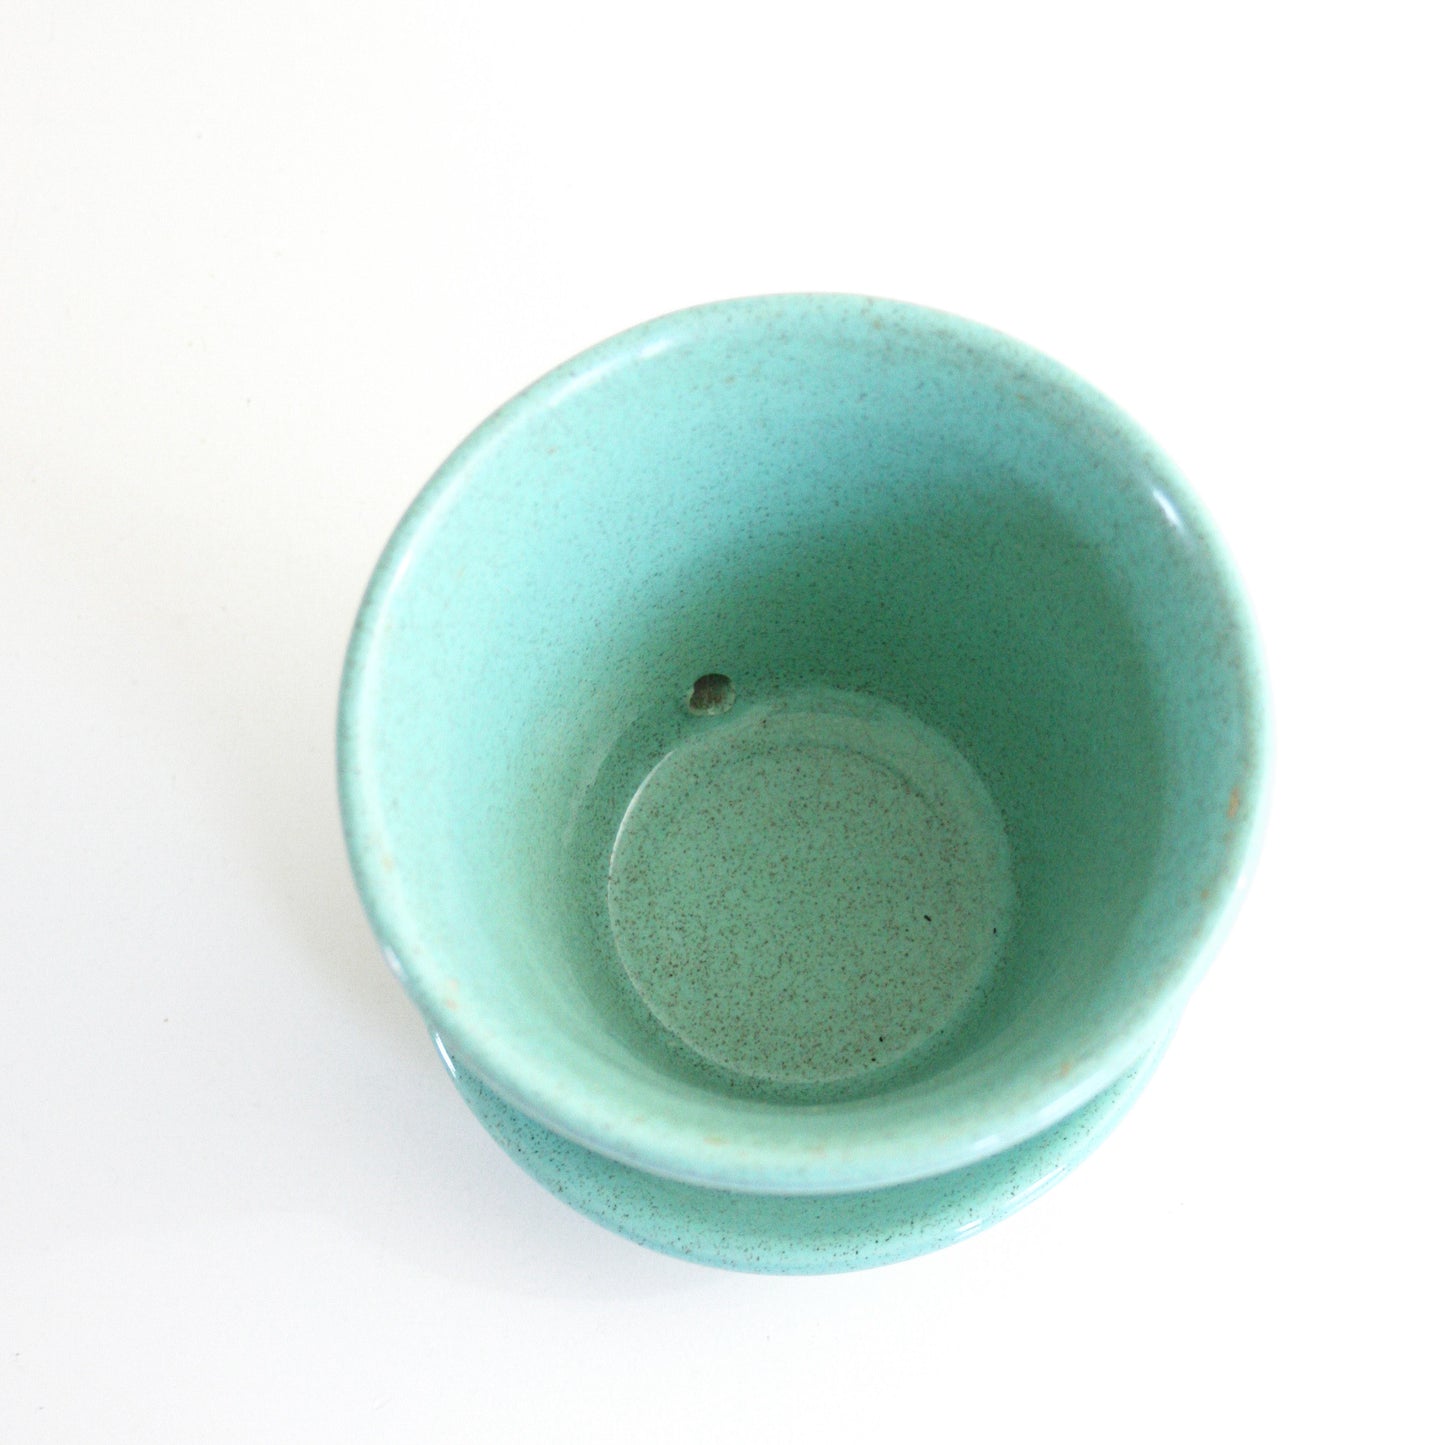 SOLD - Mid Century Modern Pfaltzgraff Green Ceramic Planter / Pfaltzgraff Ringware Flower Pot